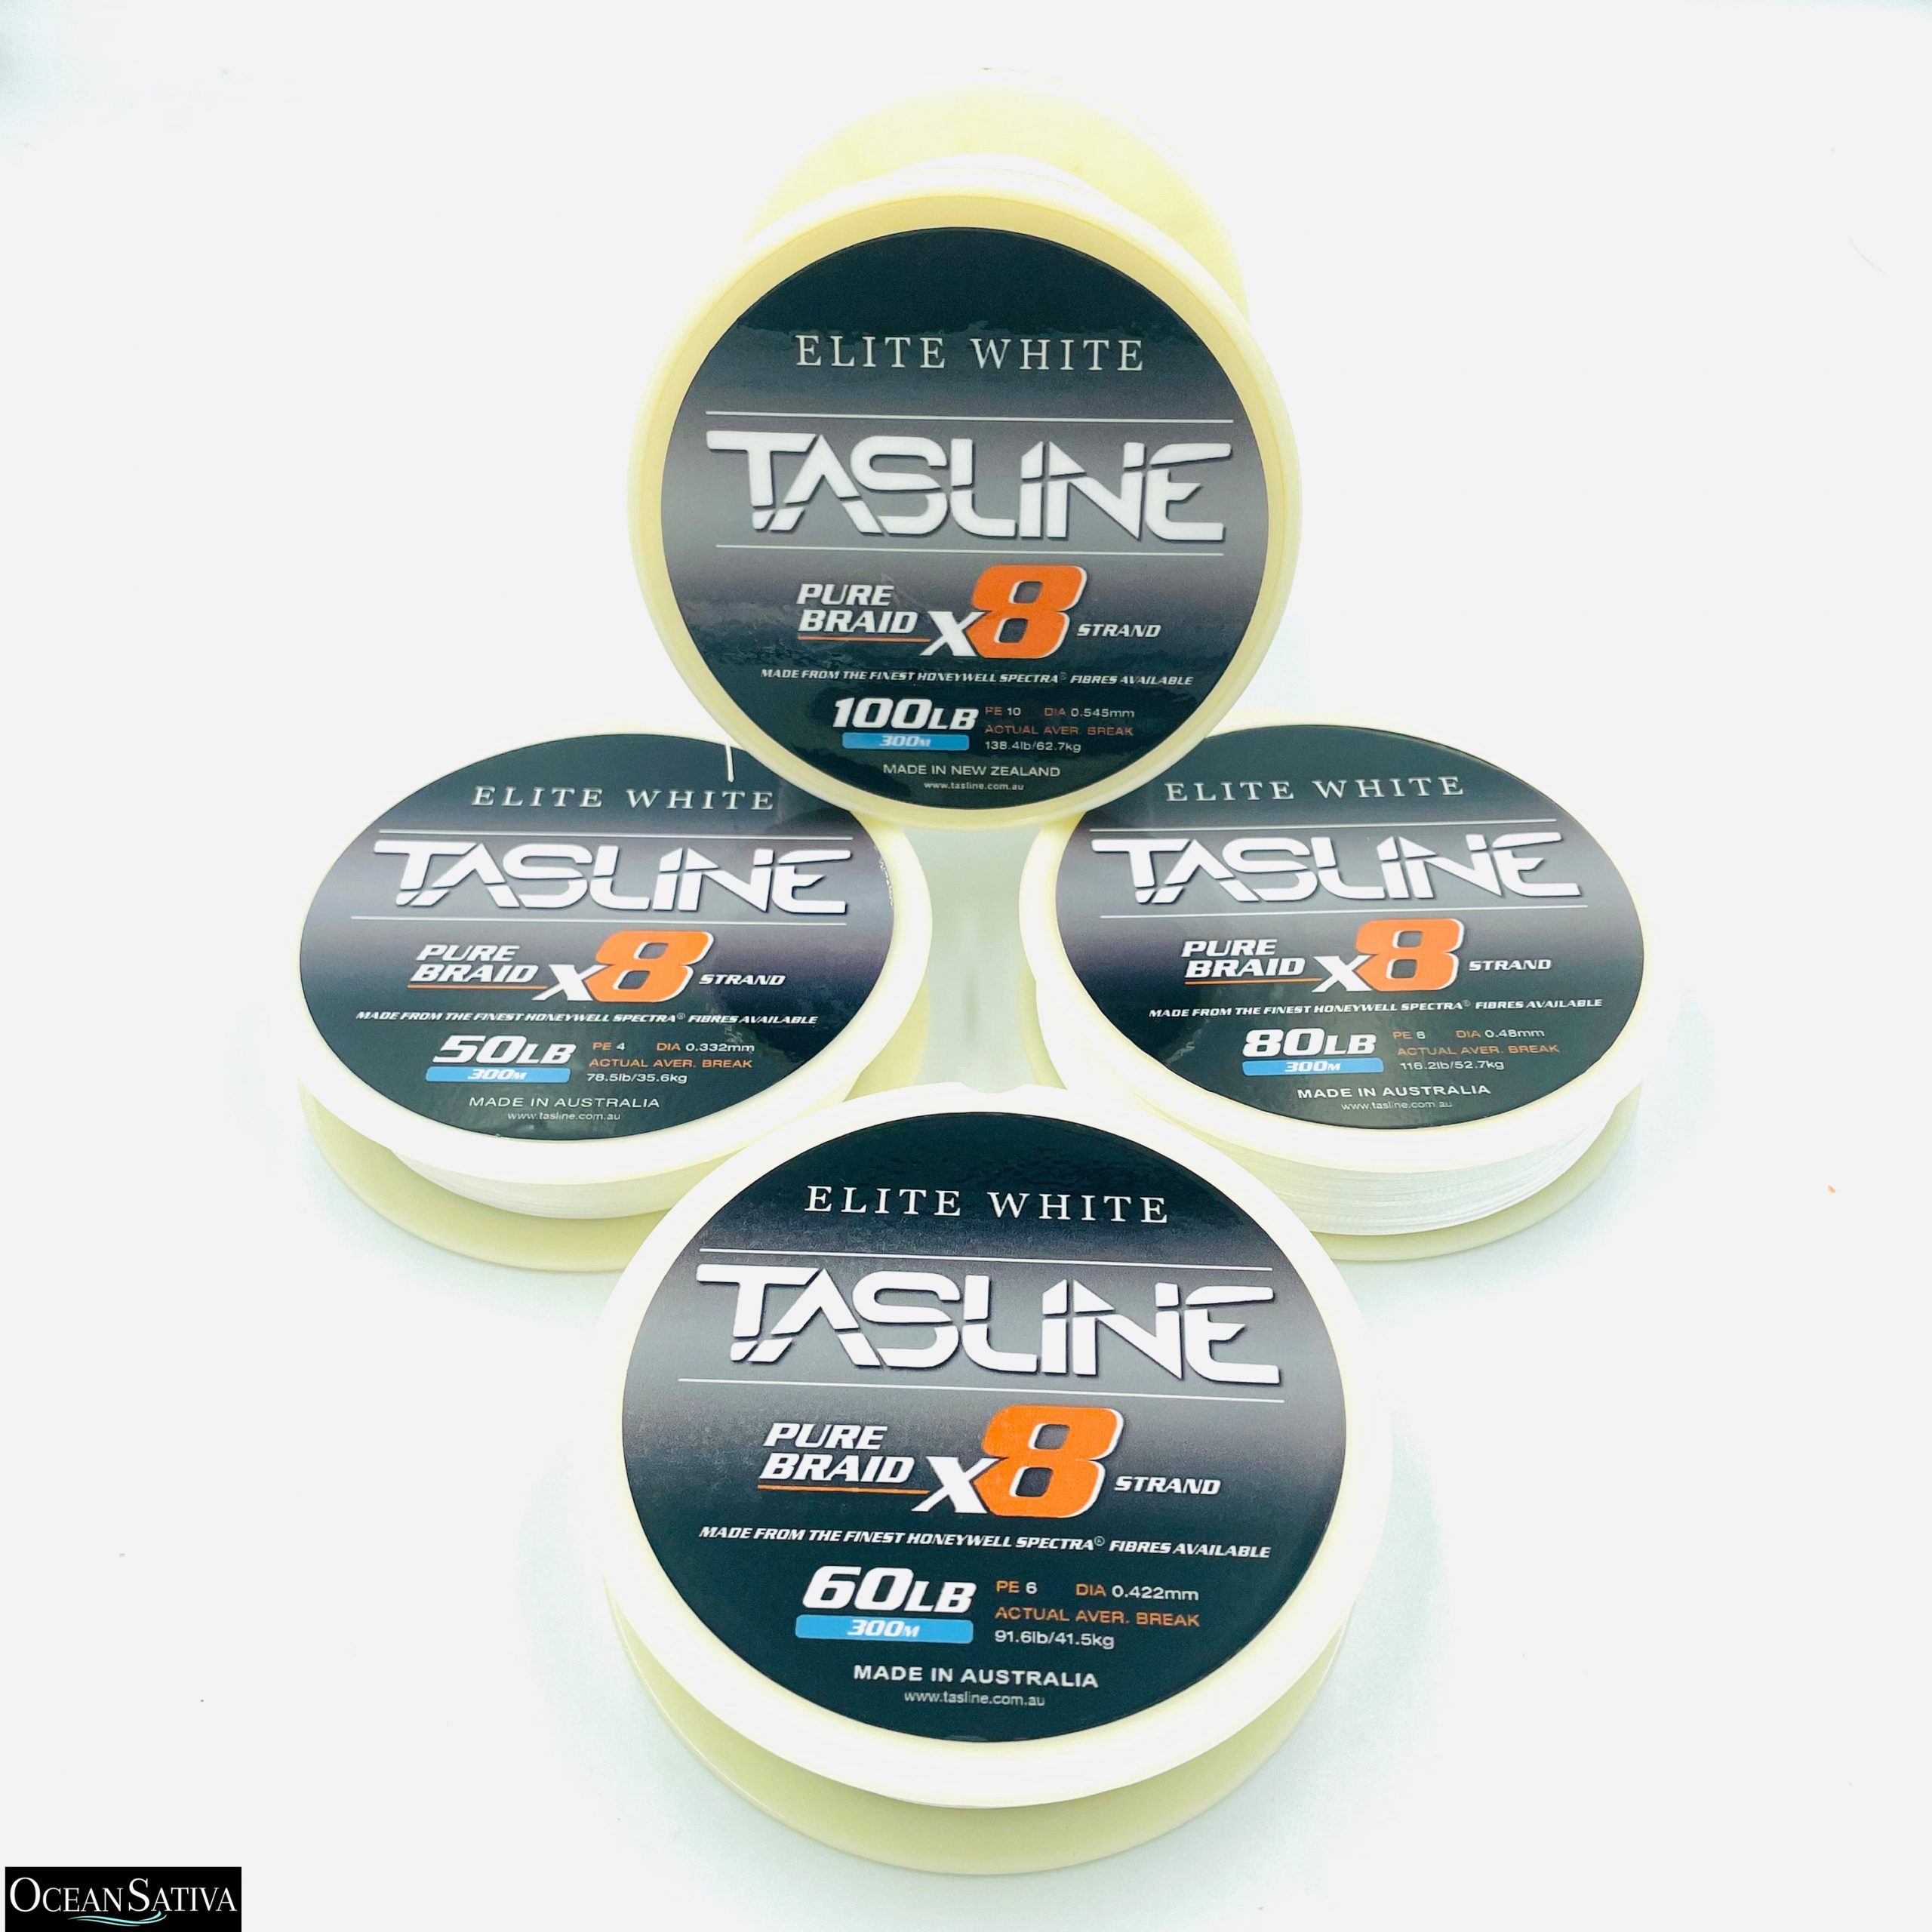 Tasline Elite White 60lb - Tasline